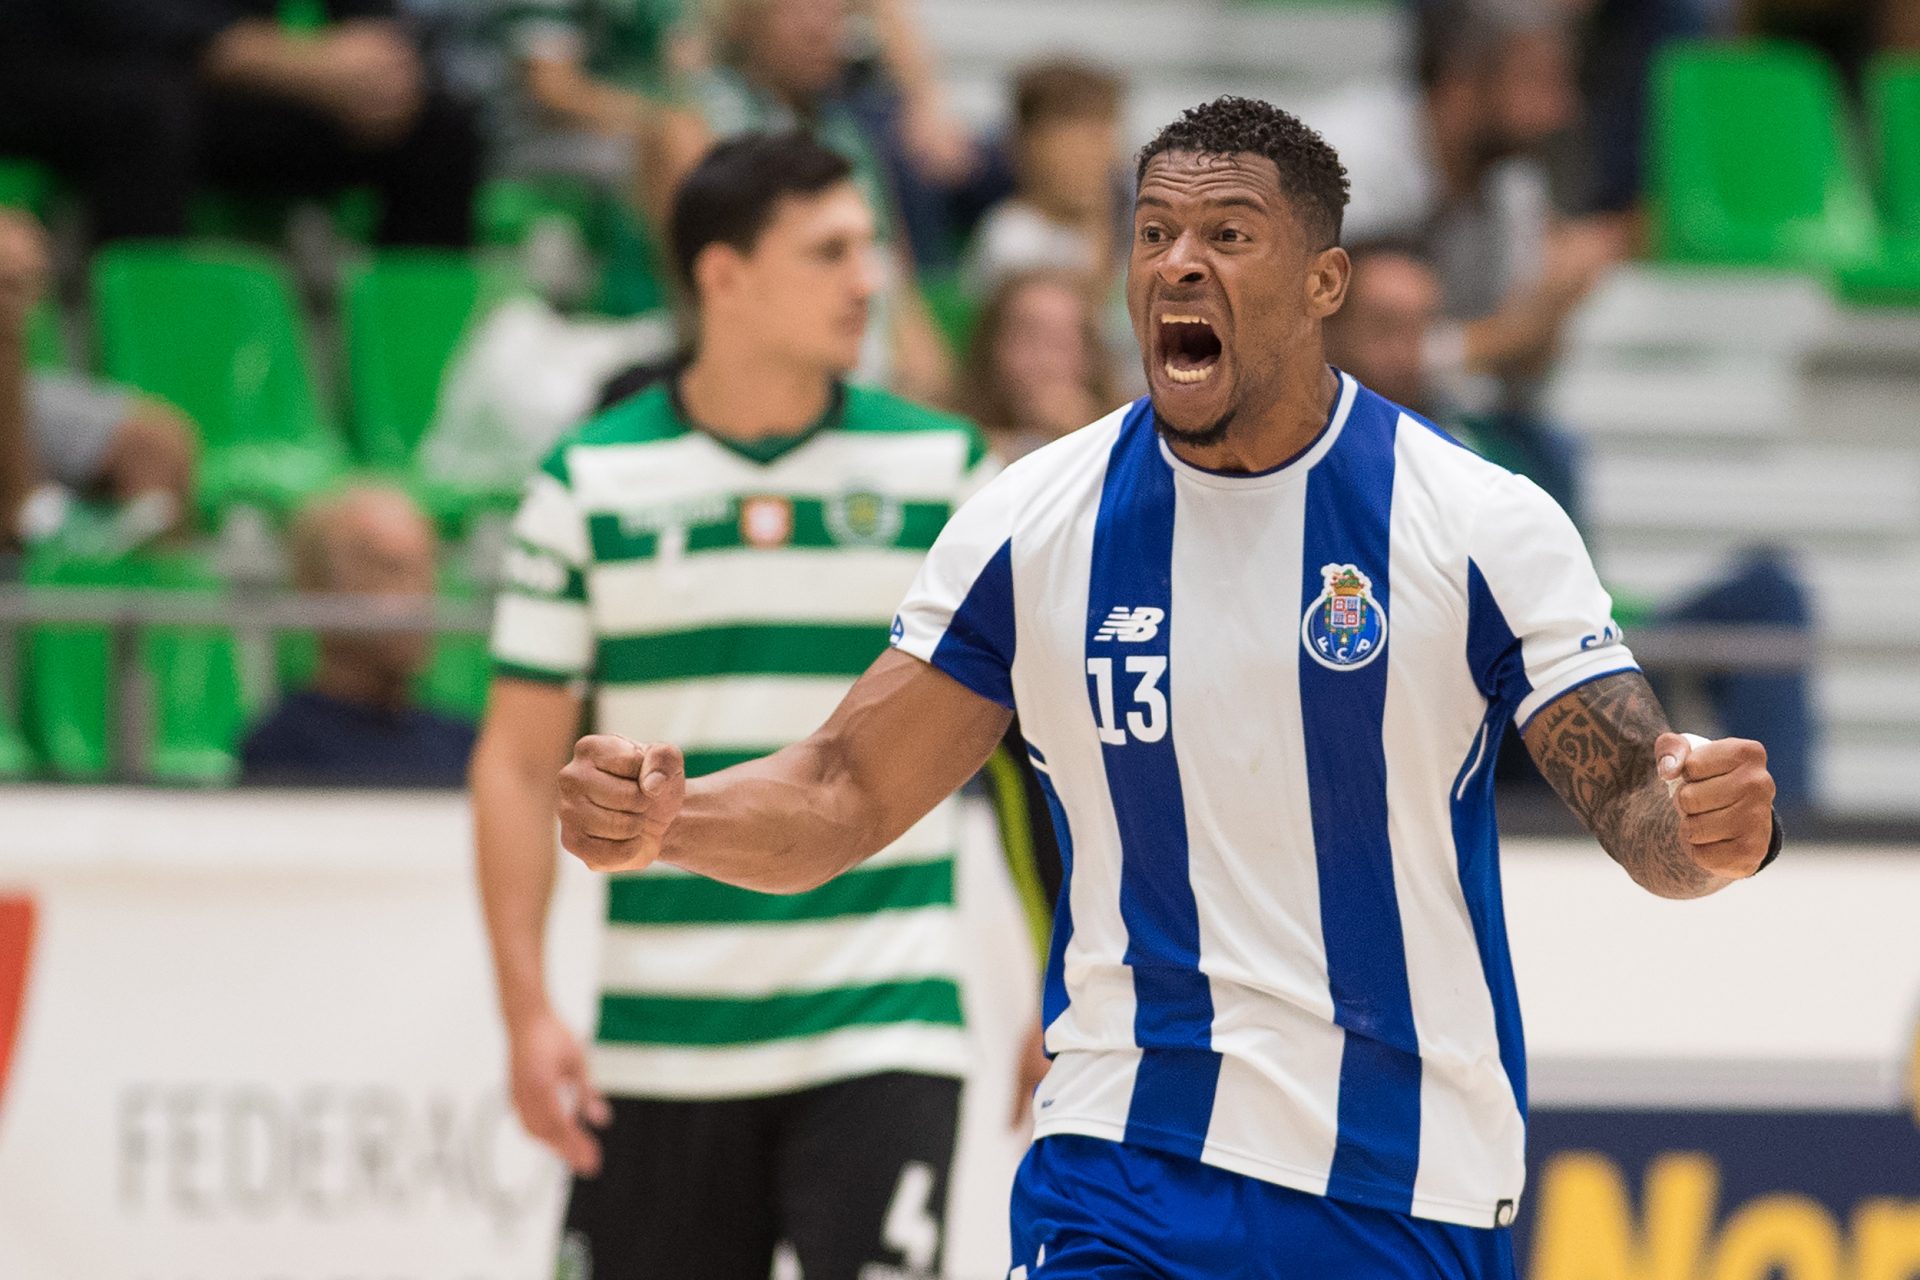 Campeonato Andebol 1: FC Porto impõe a primeira derrota ao Sporting CP